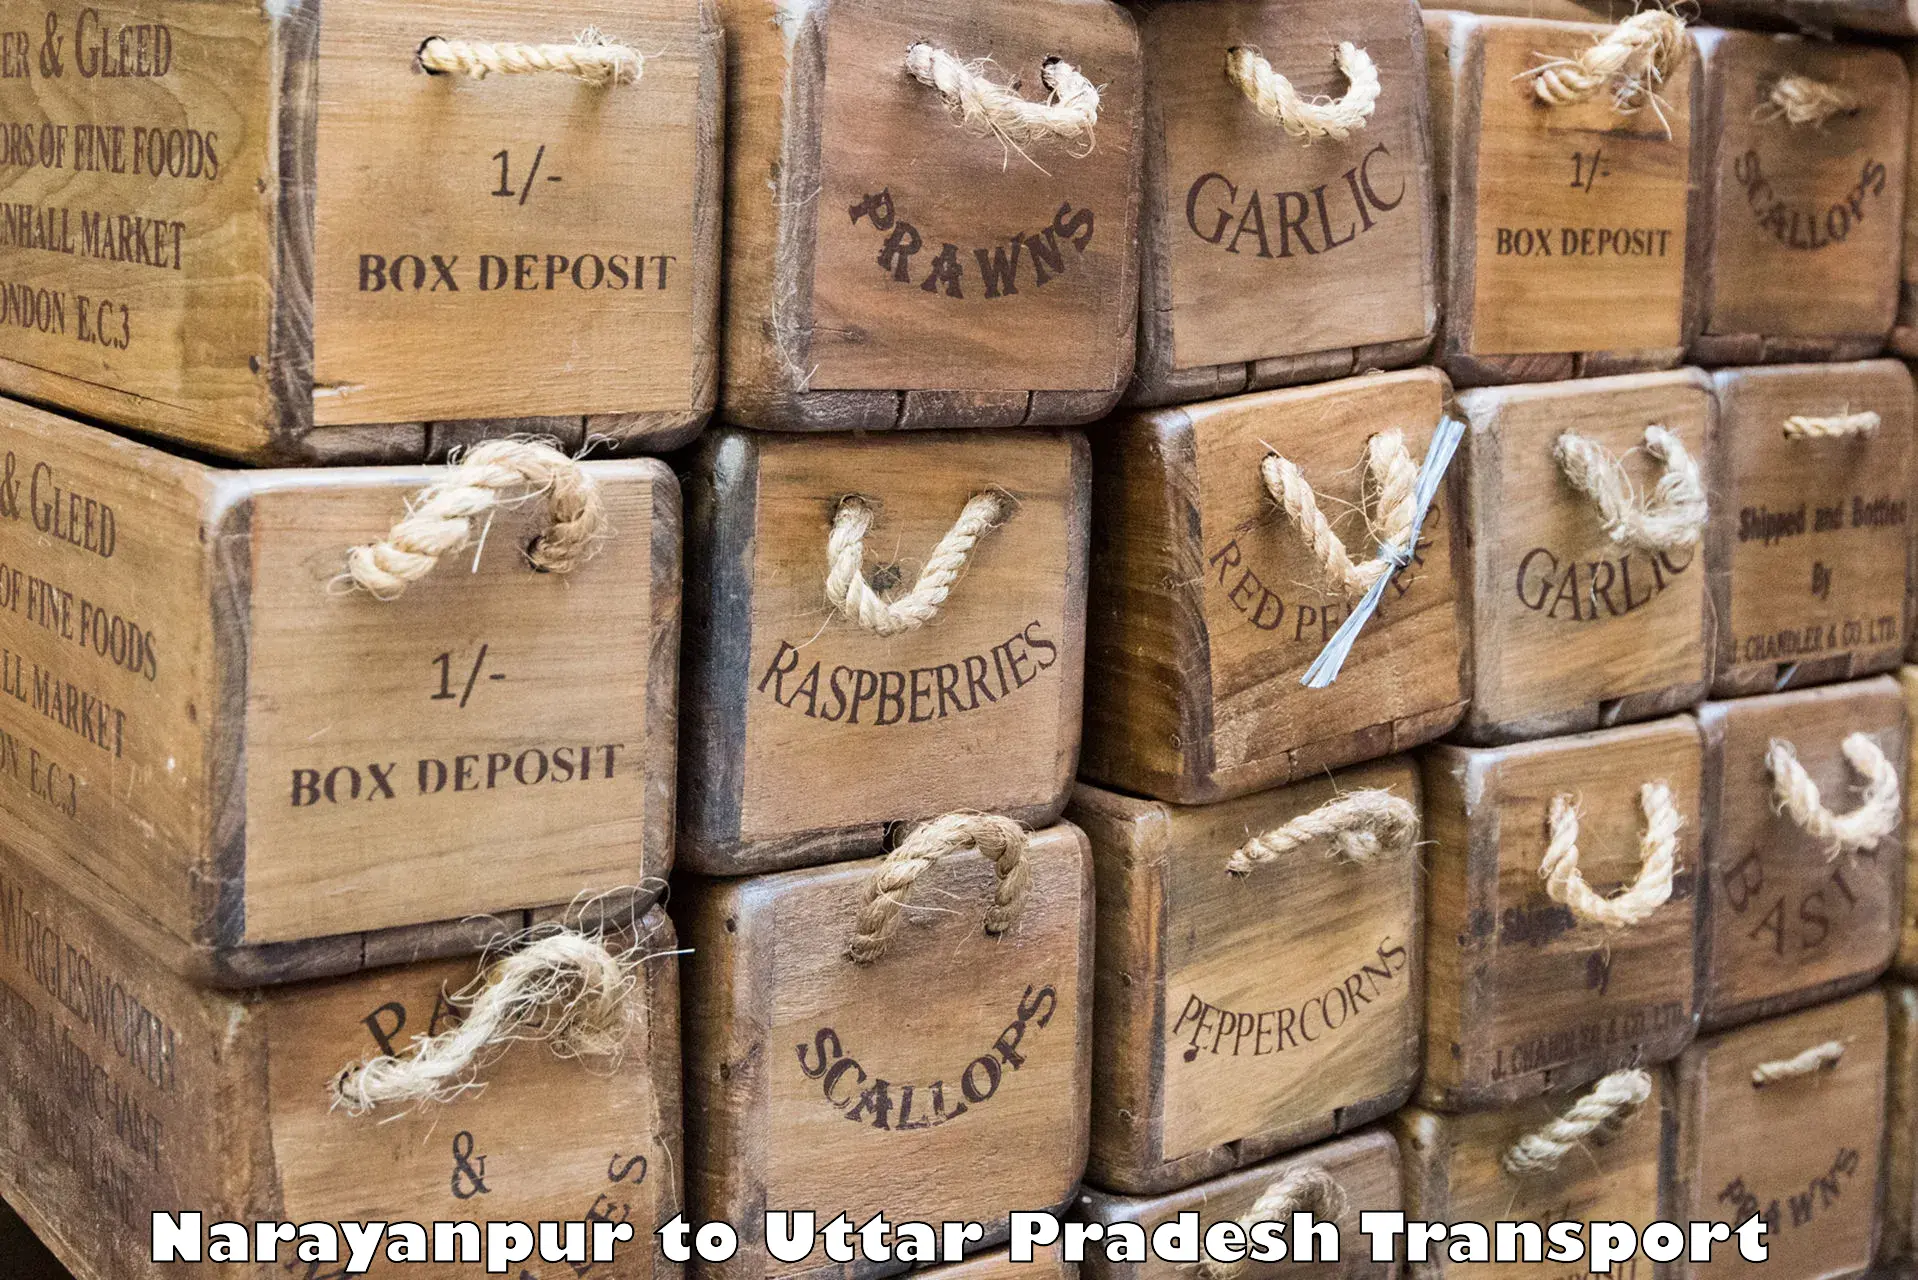 Truck transport companies in India Narayanpur to Baksha